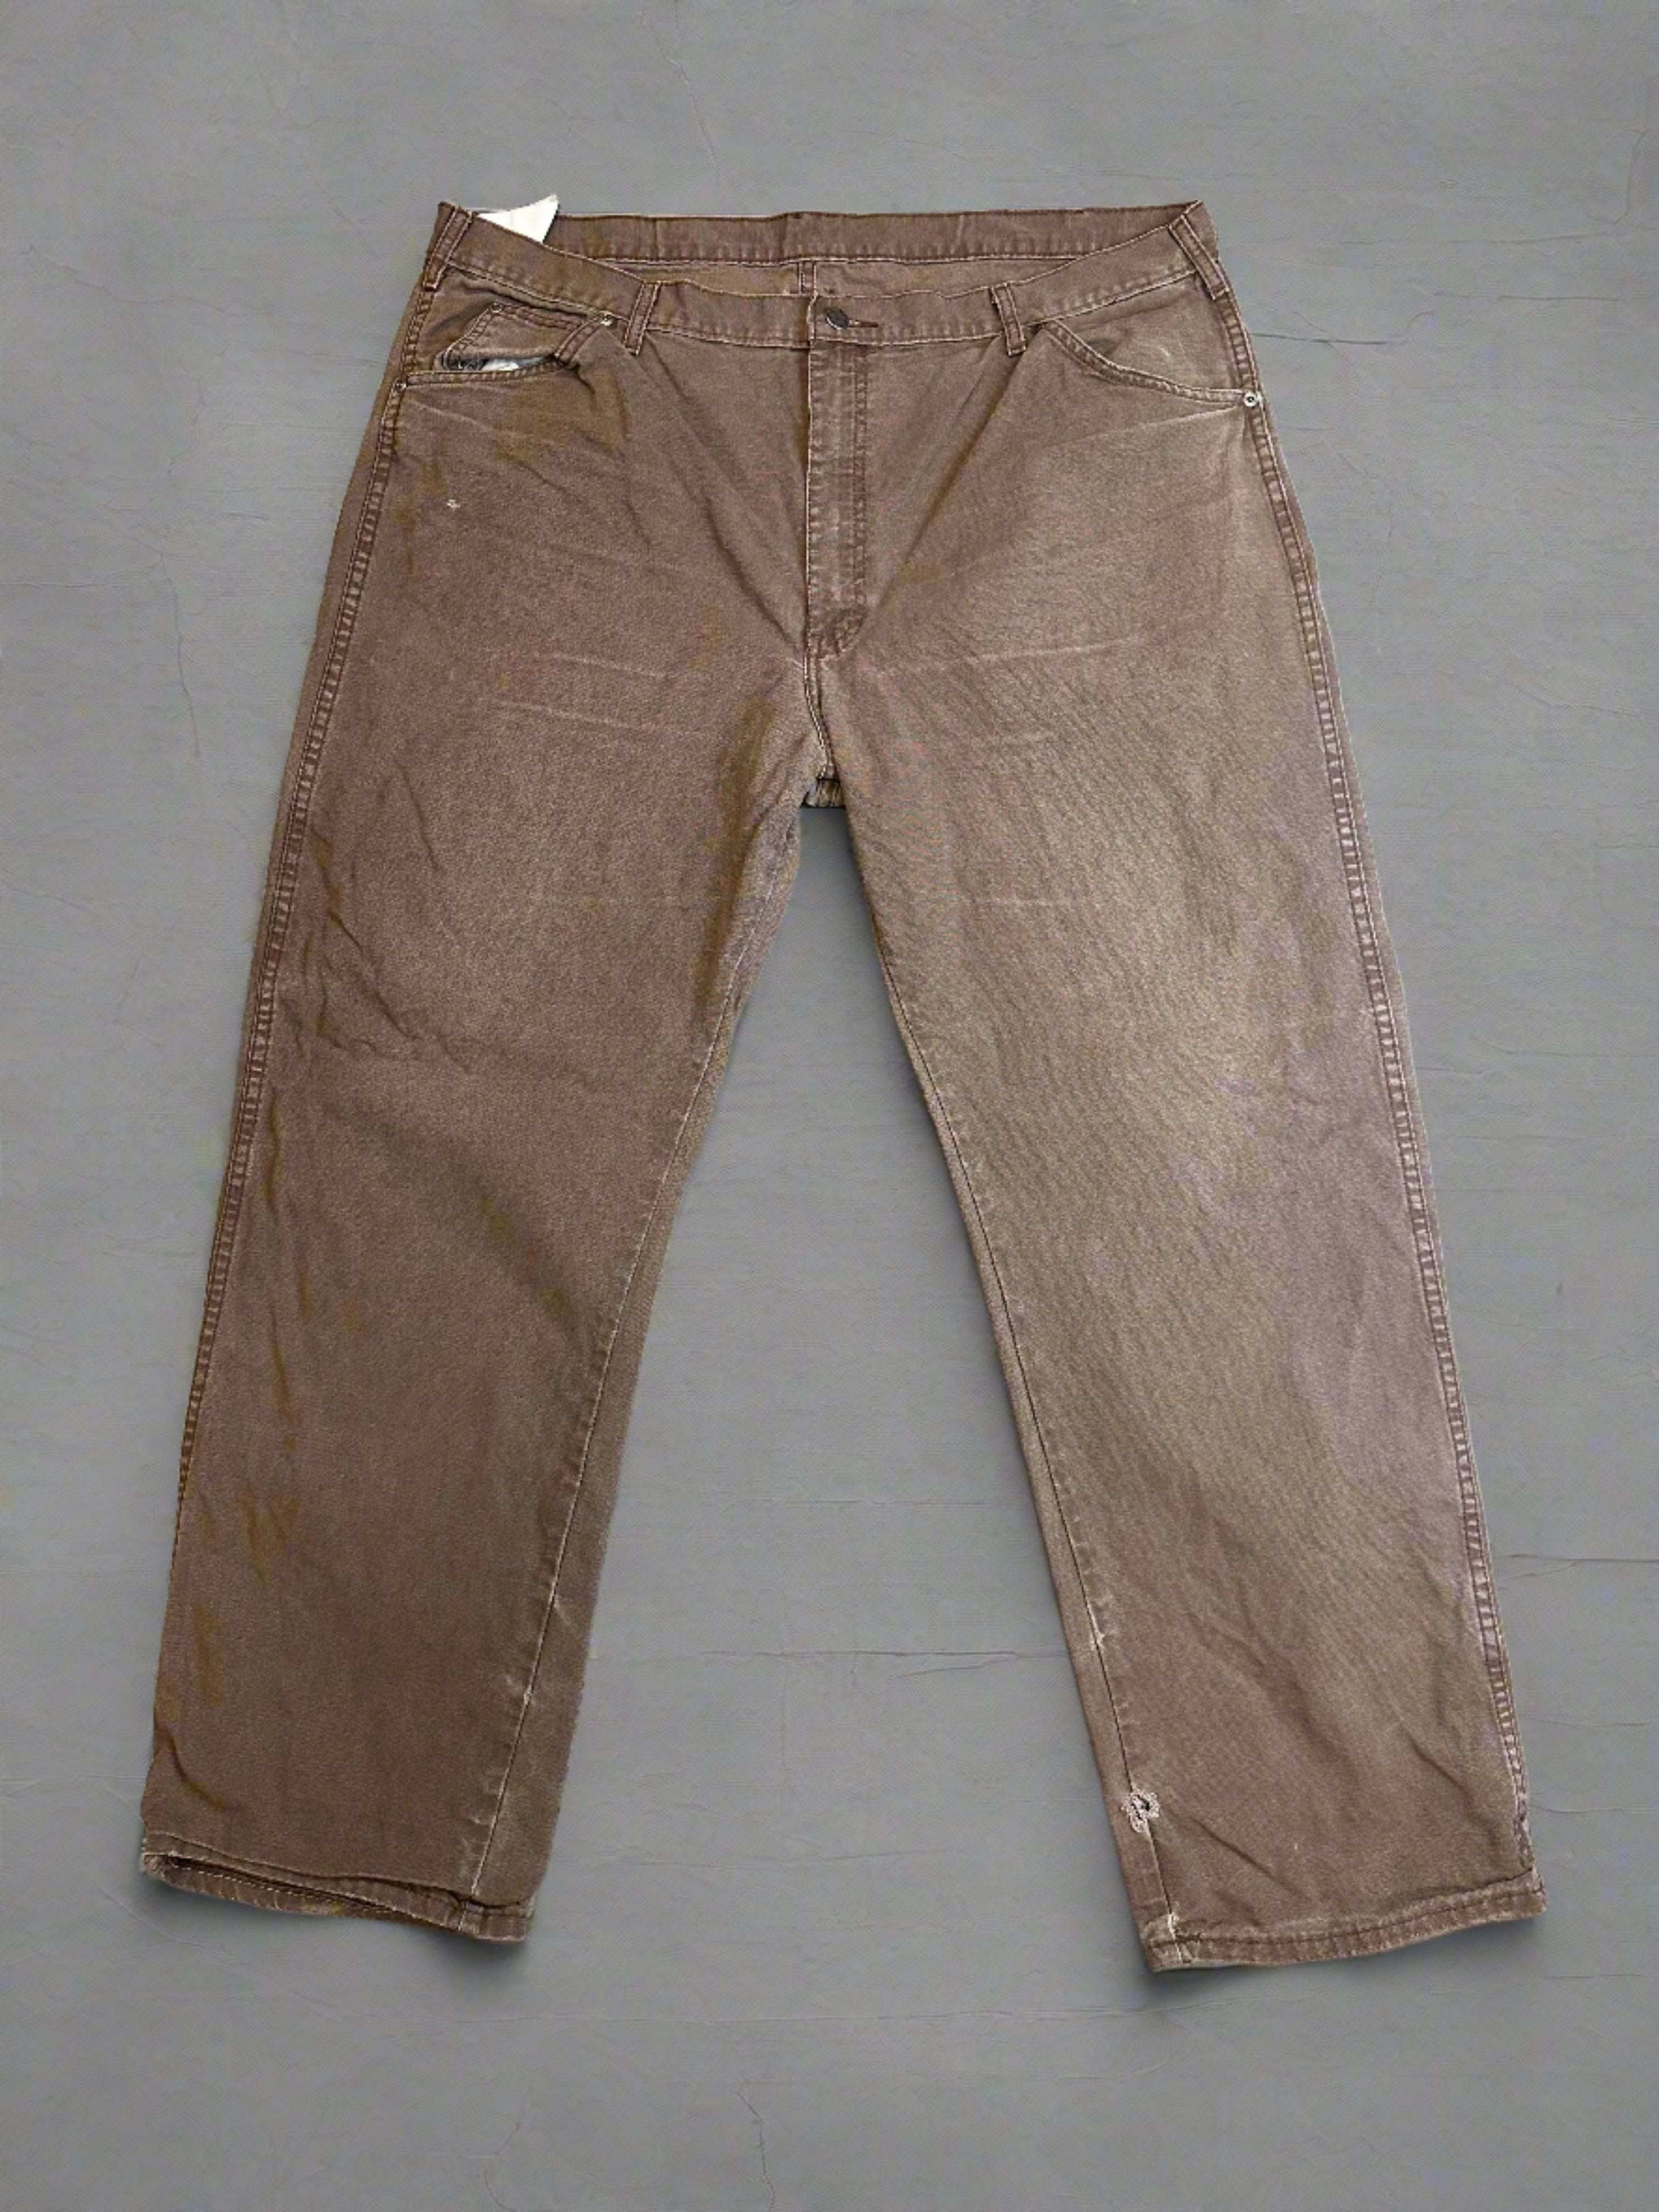 Vintage Carhartt Carpenter Pants - 42x32 size